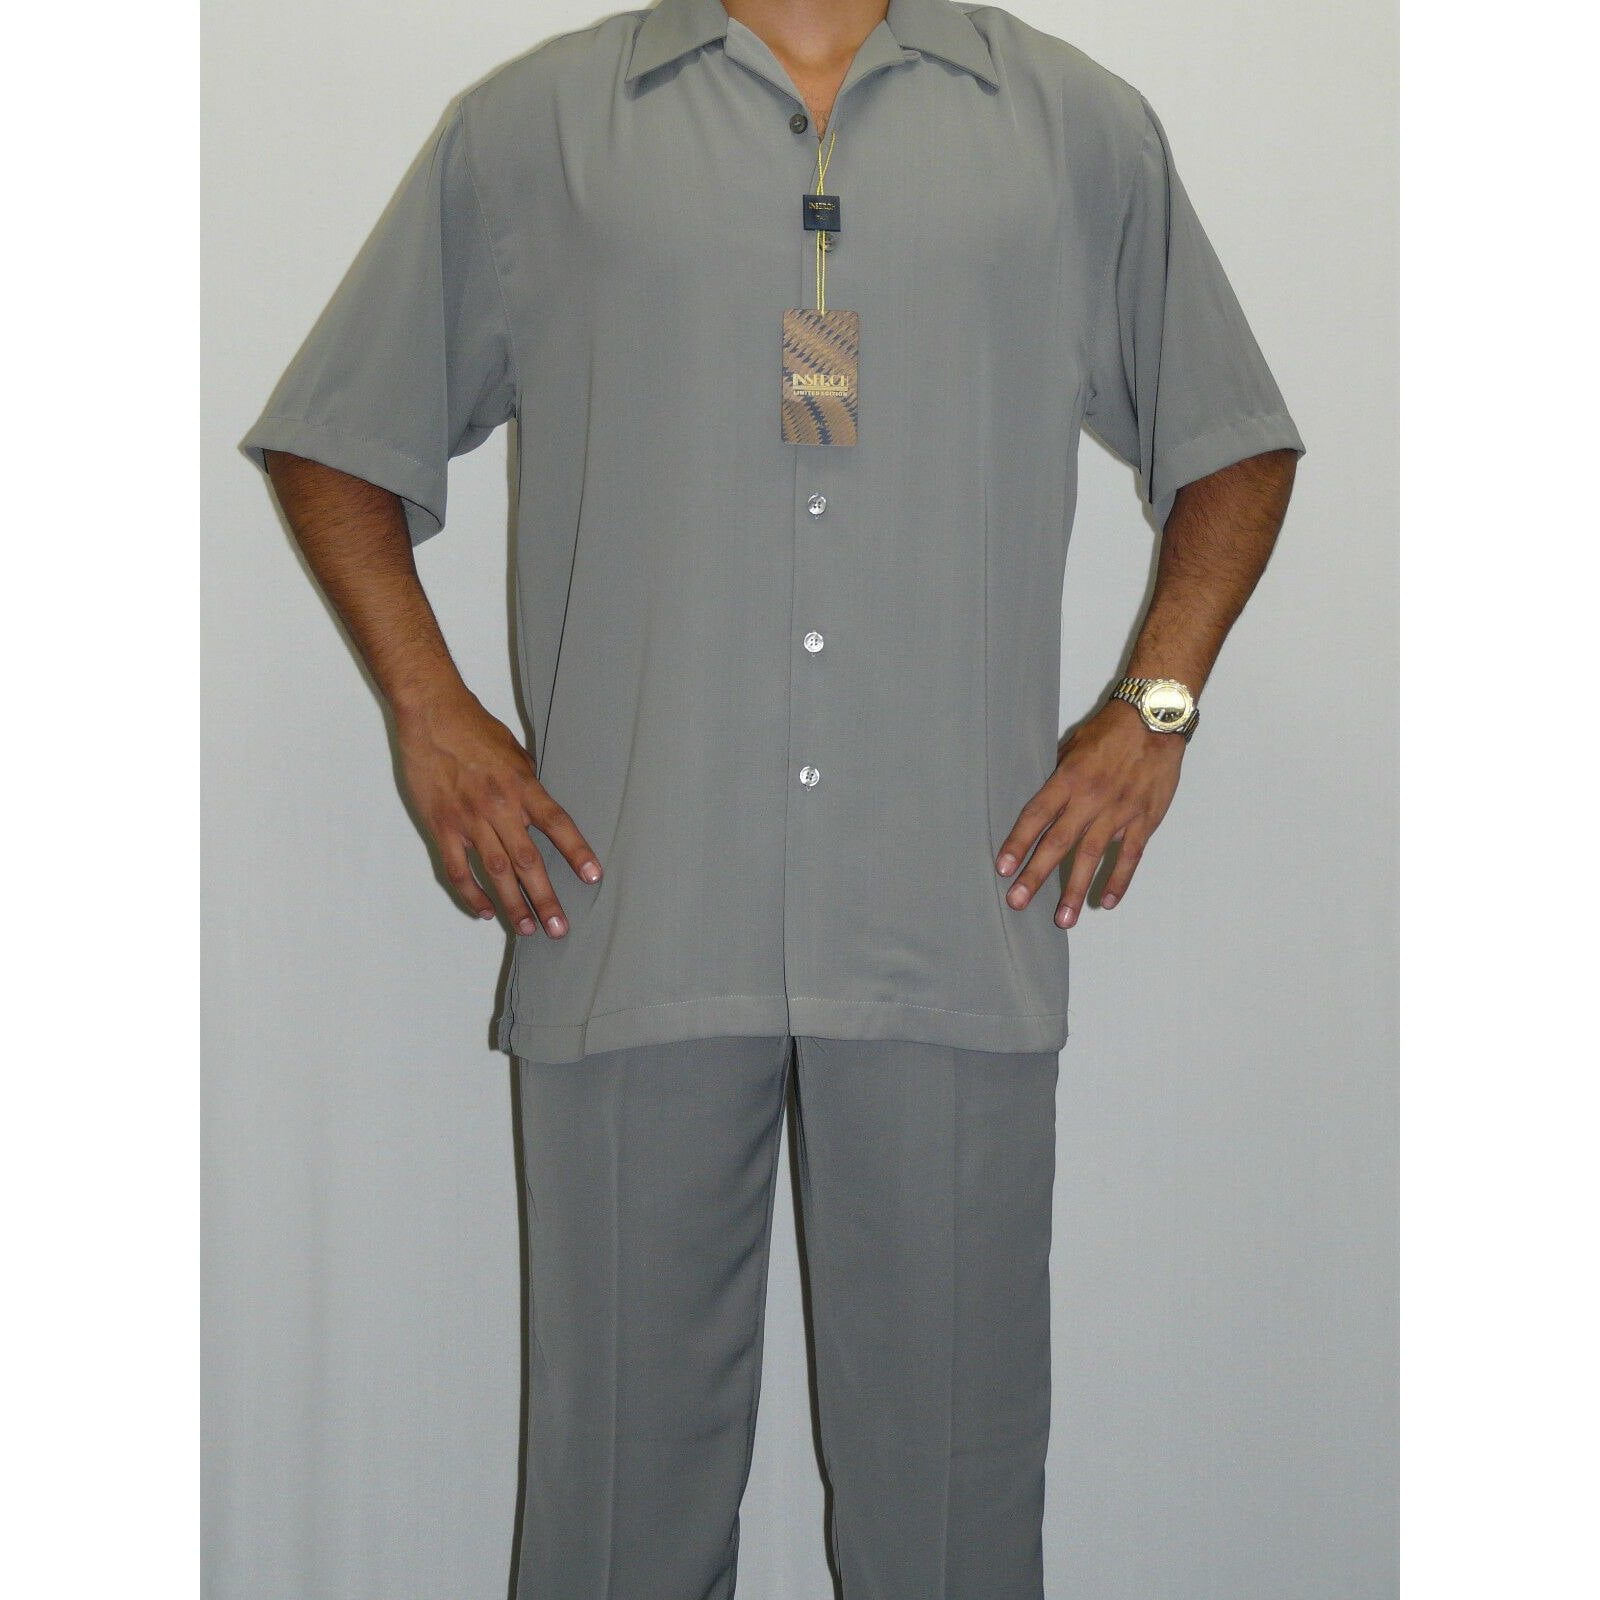 Mens INSERCH Walking Leisure Suit Two Piece Matching Slacks Shirt 9356 Caramel 